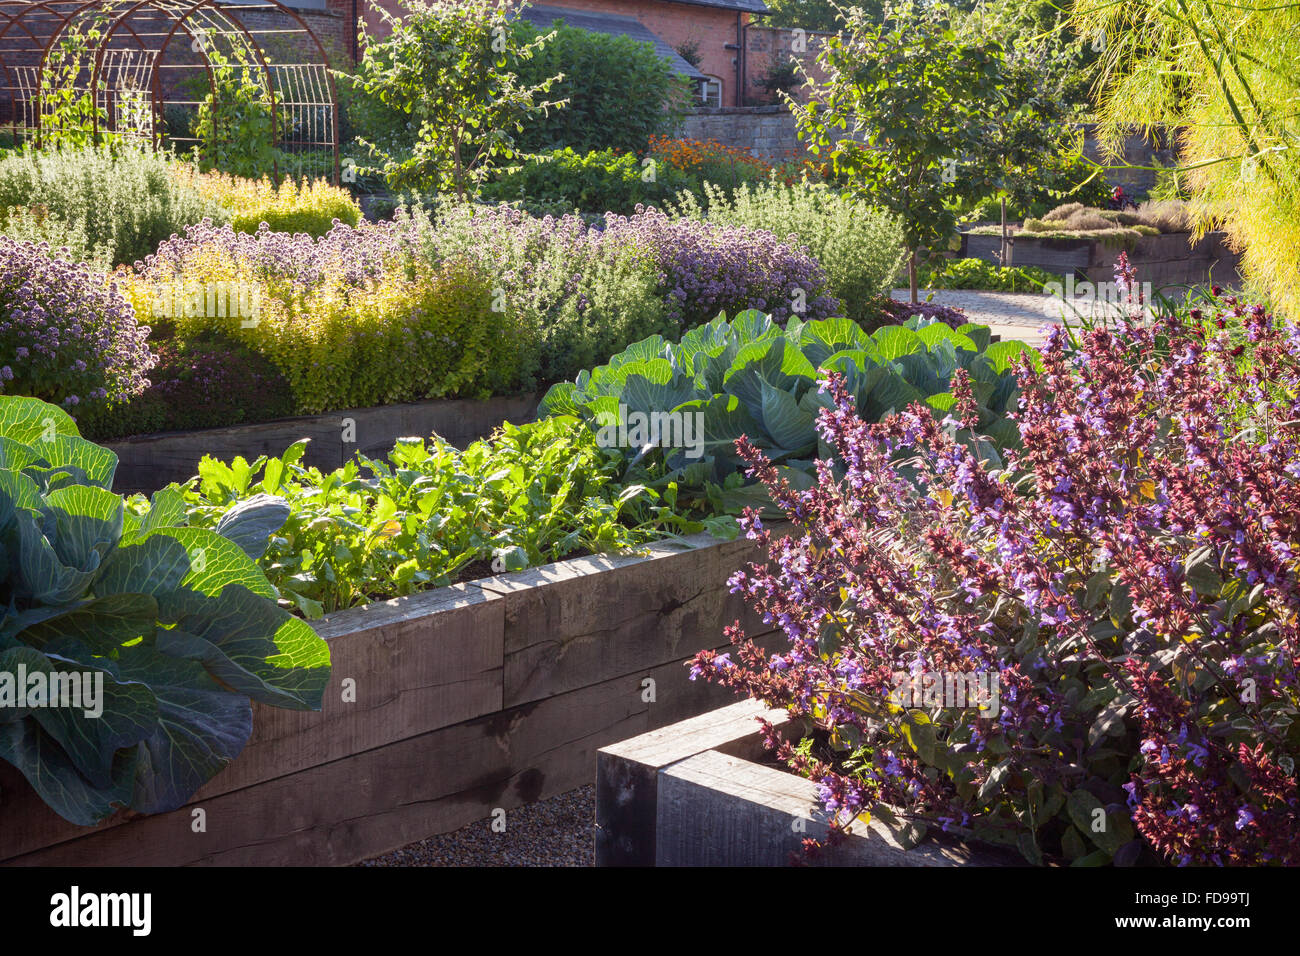 The Kitchen Garden at Rudding Park, North Yorkshire, UK. Summer, July 2015. Stock Photo